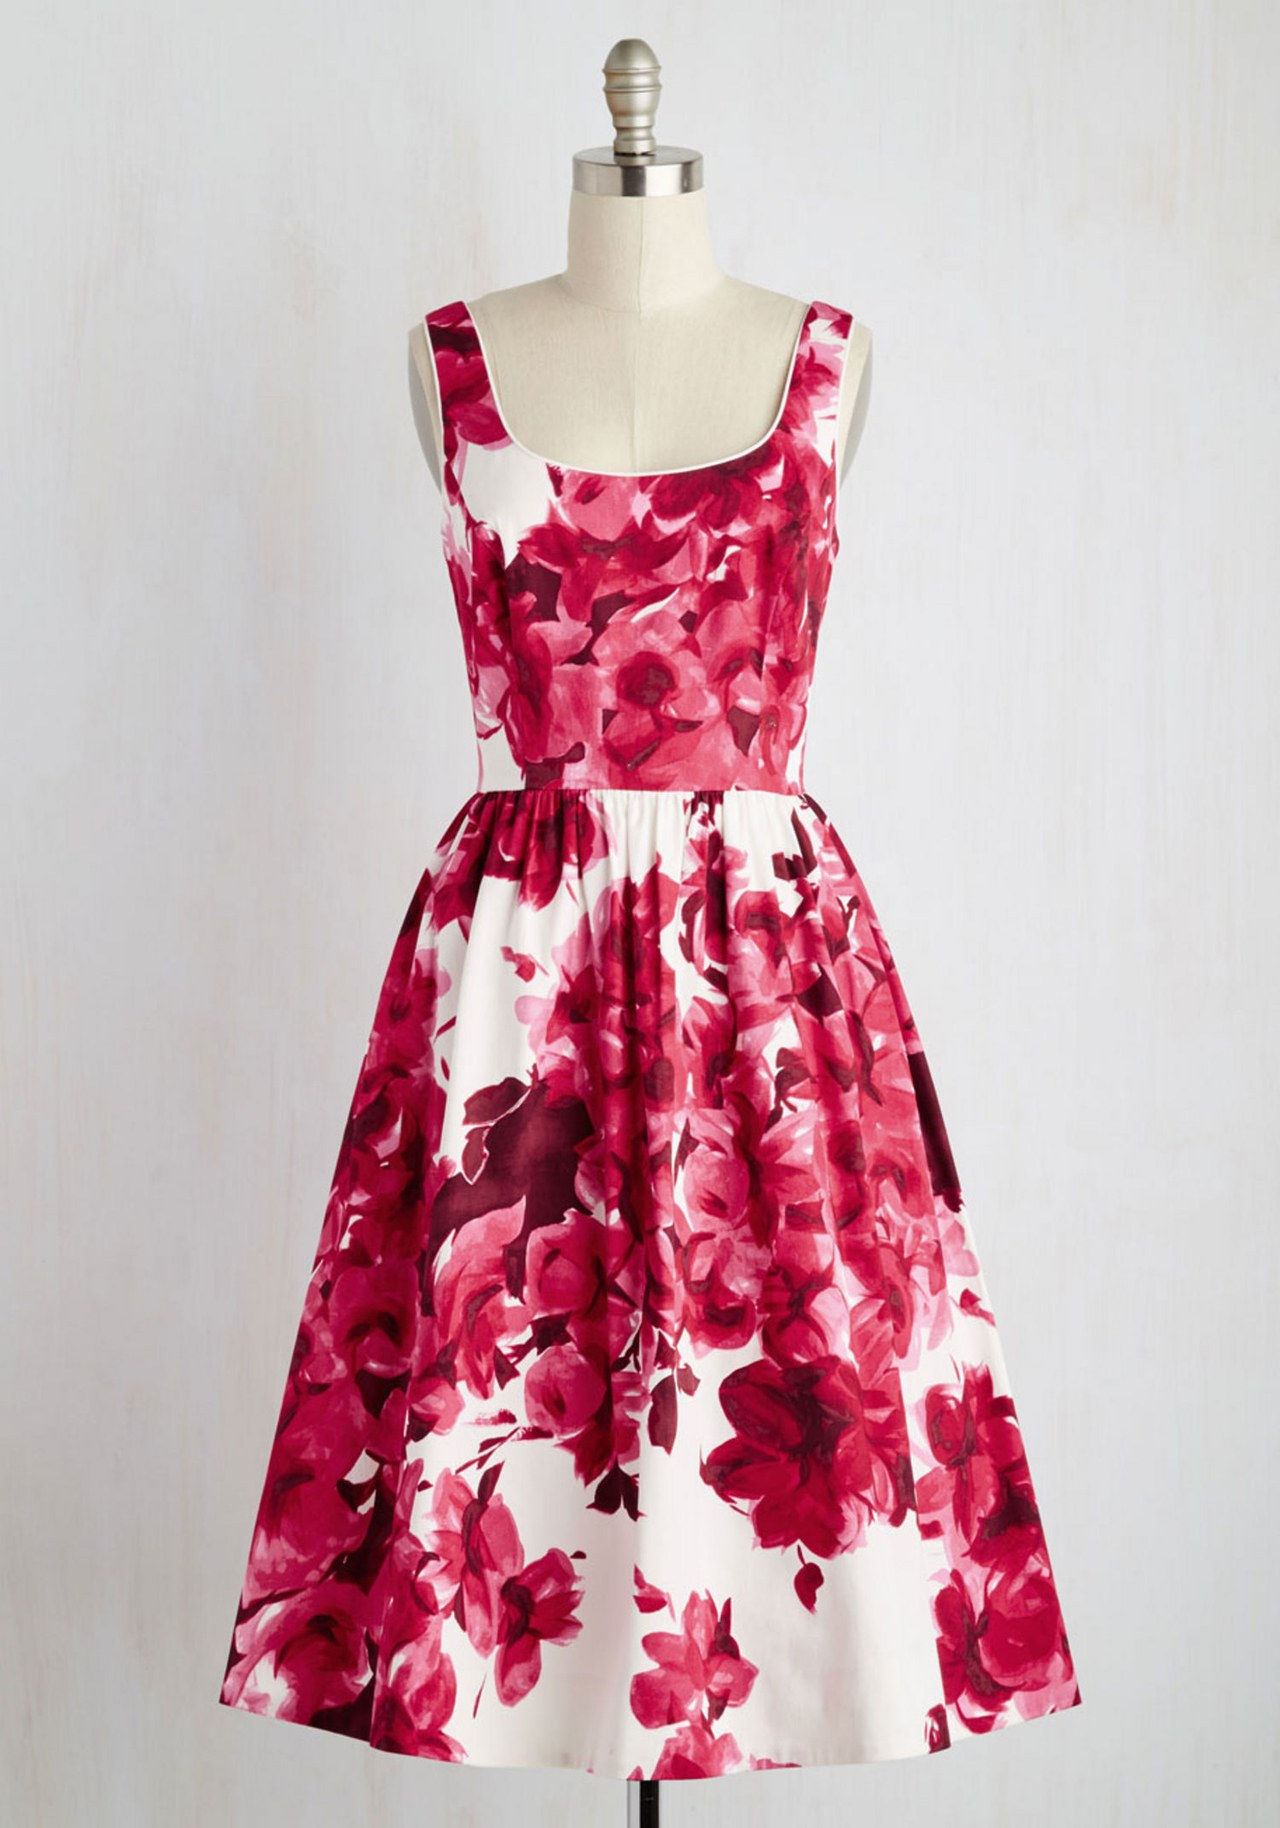 2 floral bridesmaid dresses 0127 courtesy